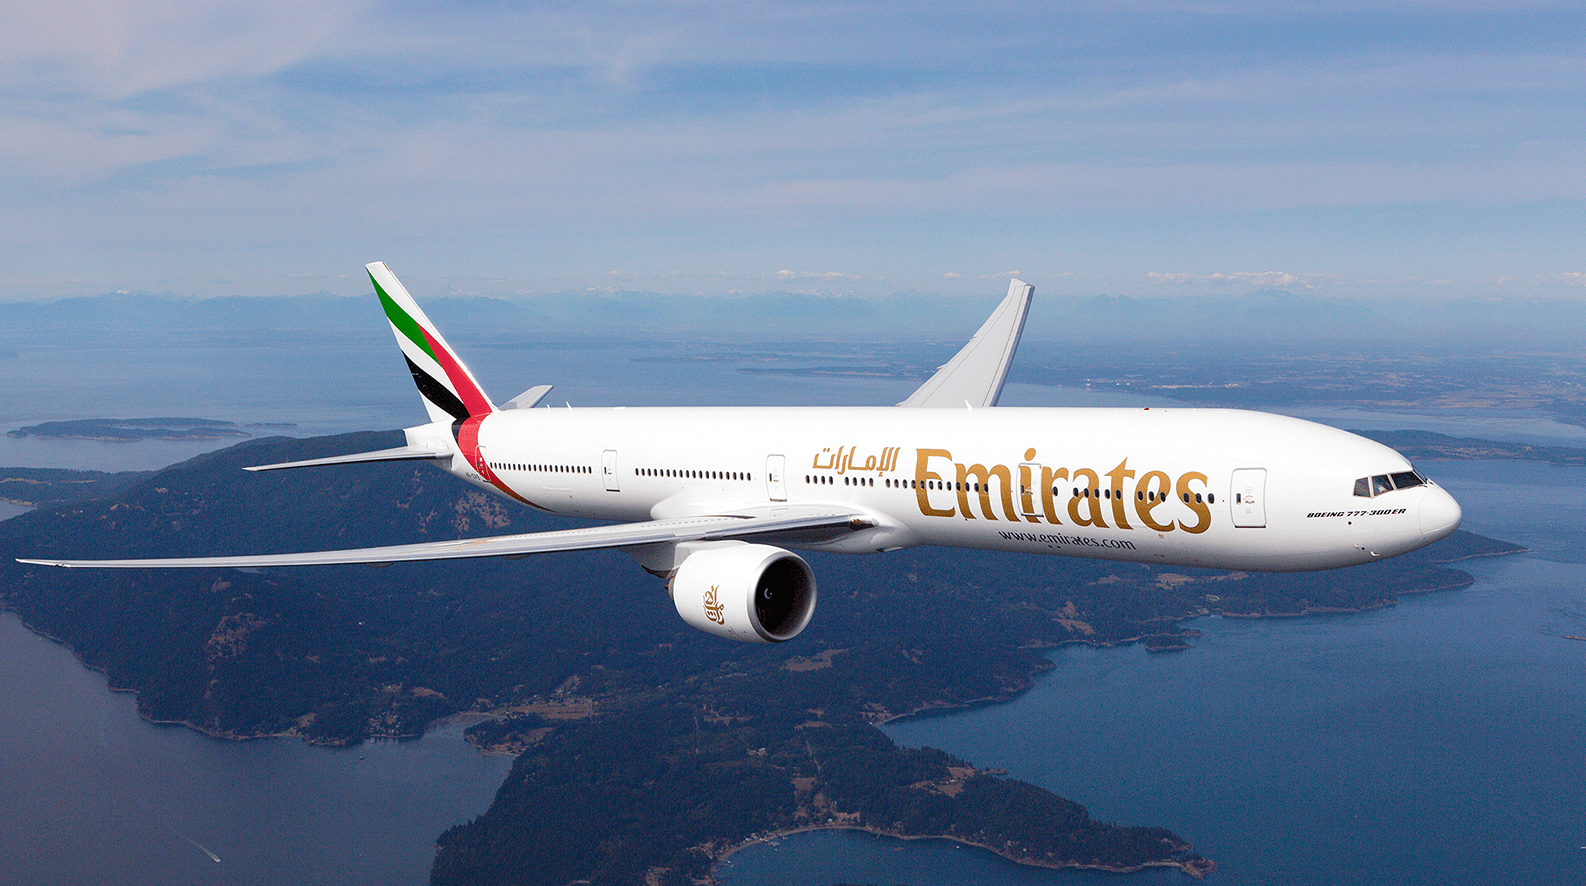 Emirates flight suffers damage after hitting 36 flamingos 5 Emirates flight suffers damage after hitting 36 flamingos